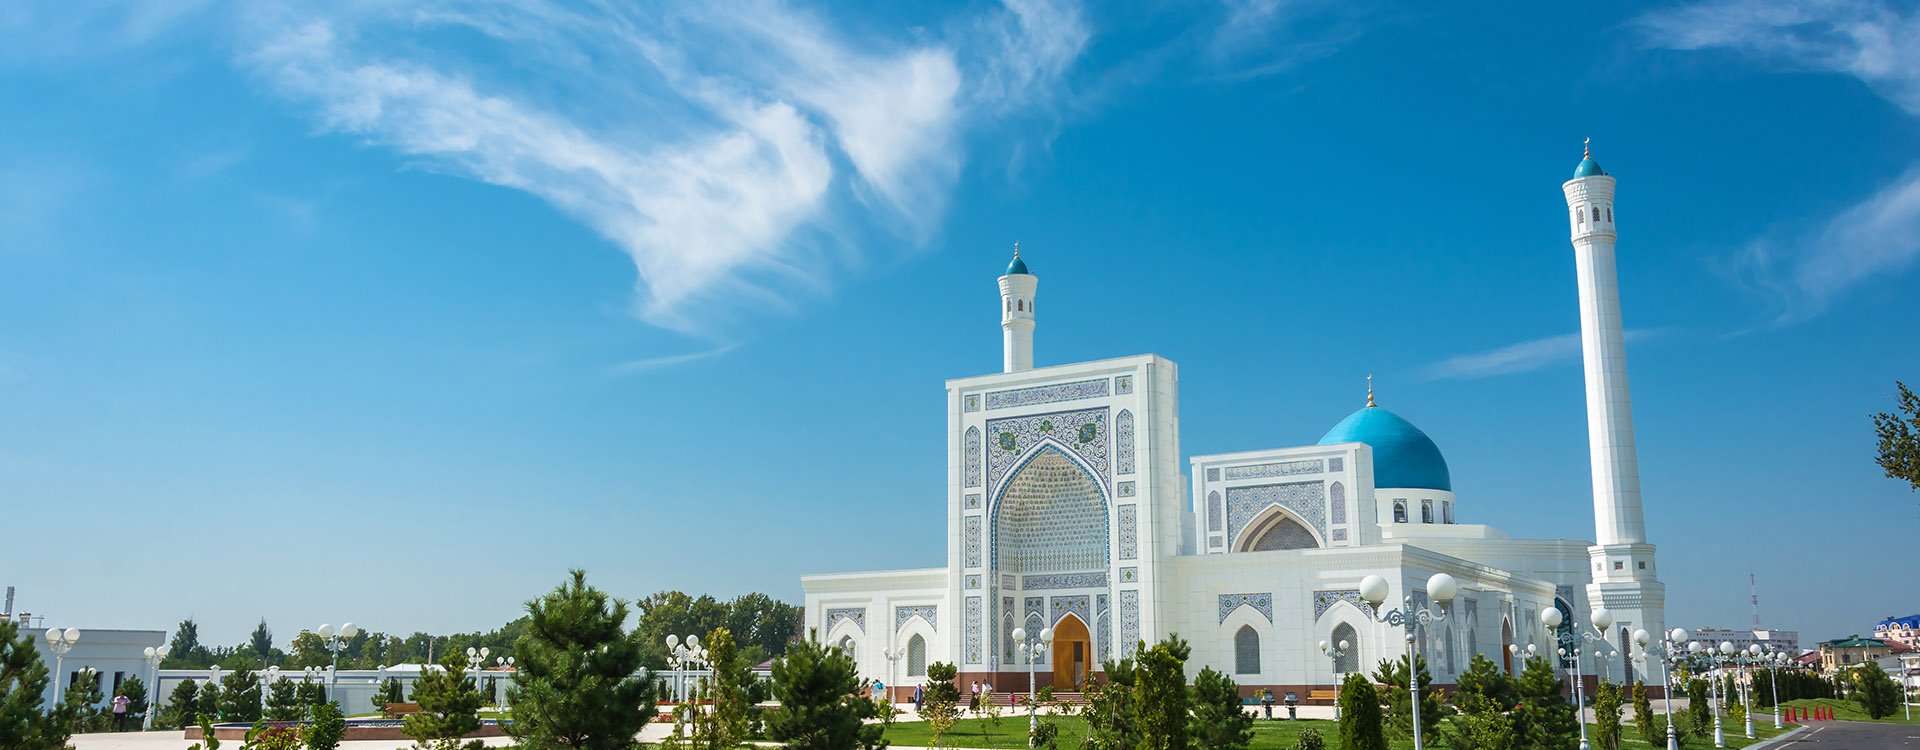 Beautiful white Minor mosque in Tashkent on a sunny day, Uzbekistan